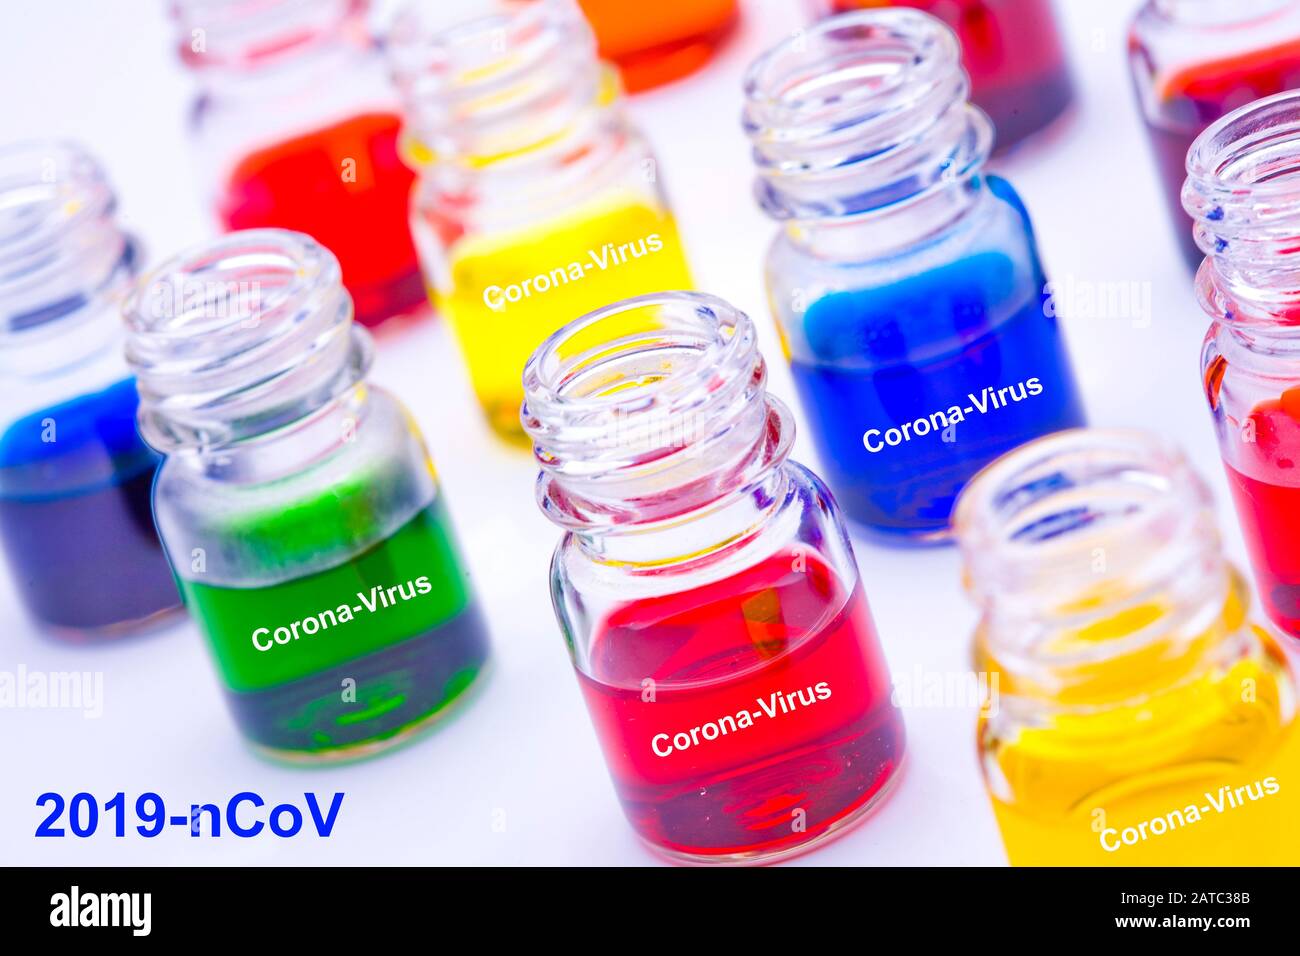 Glaeser mit bunten Farben, Test auf Corona-virus, Coronavirus, 2019-nCoV, Banque D'Images